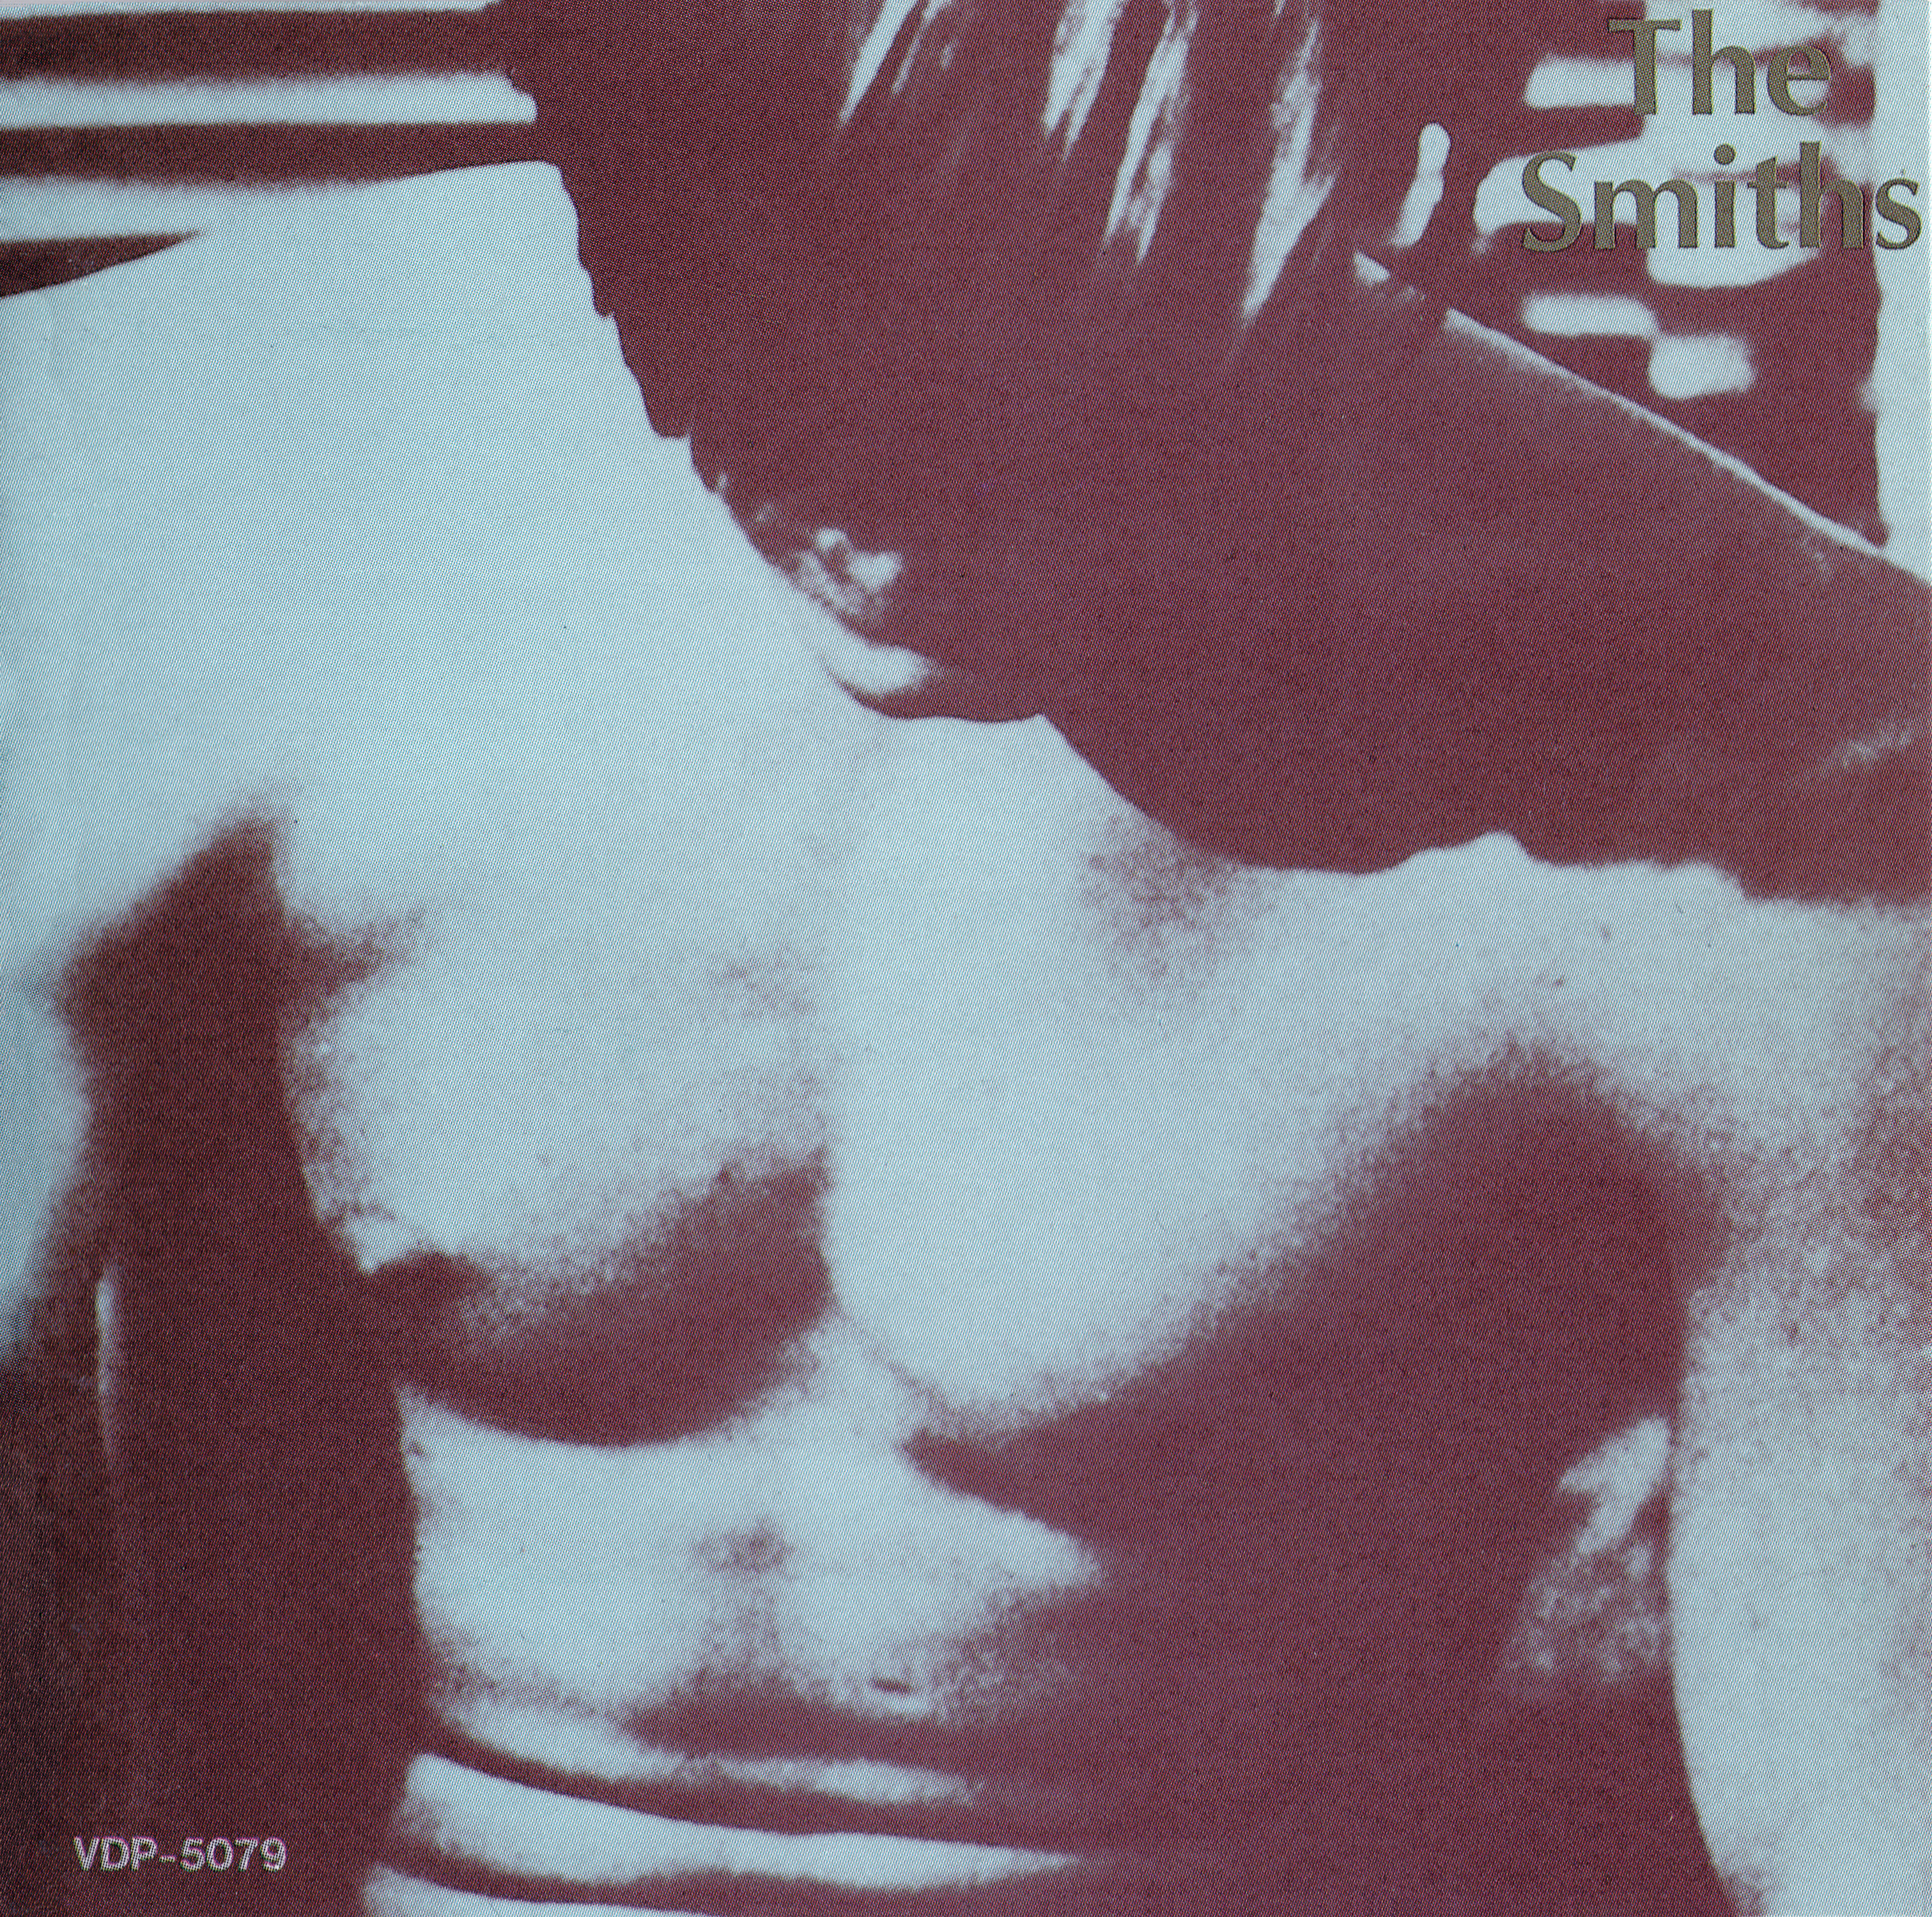 The Smiths (ザ・スミス) 1stアルバム『The Smiths (ザ・スミス)』(1987年8月21日発売) 高画質CDジャケット画像 (ジャケ写)